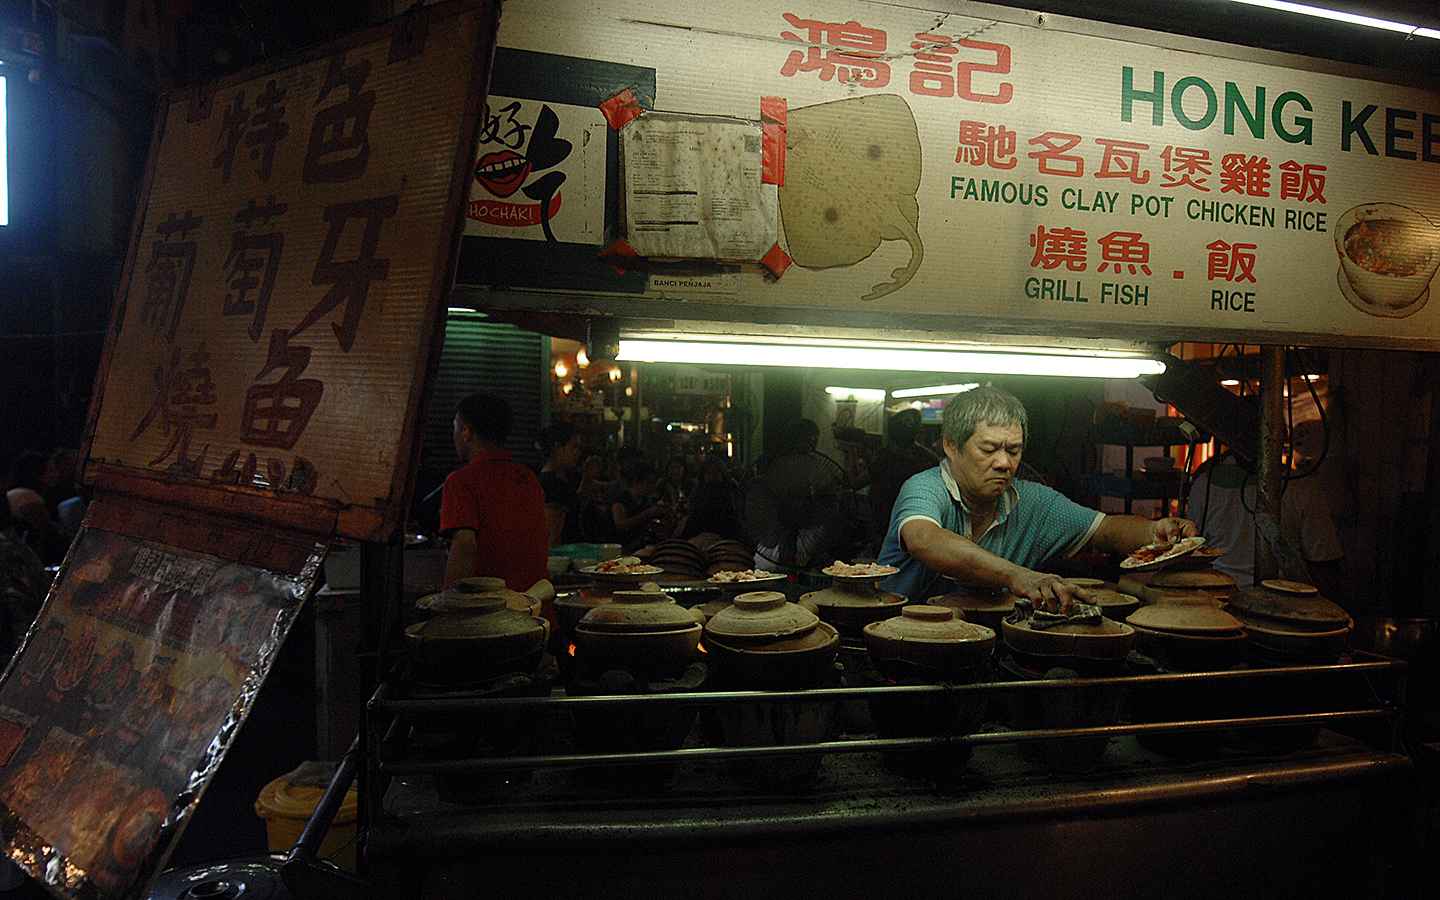 Petaling Street Market, Hong Kee Stall a Must Visit